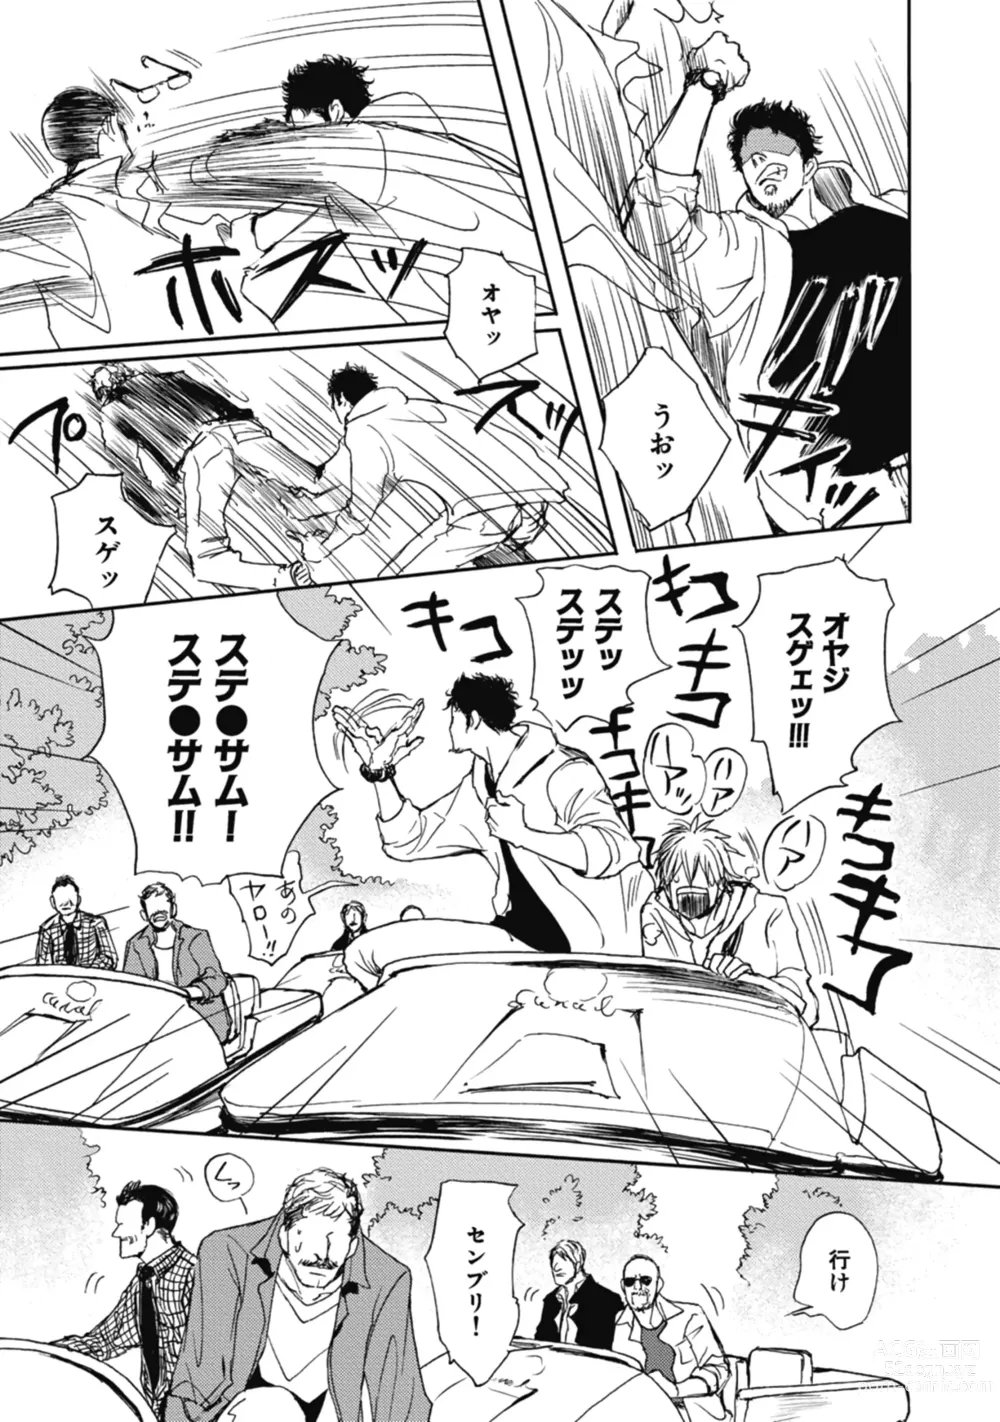 Page 25 of manga Papas Assassin. ~Futari Shite Tonde Yuku.~